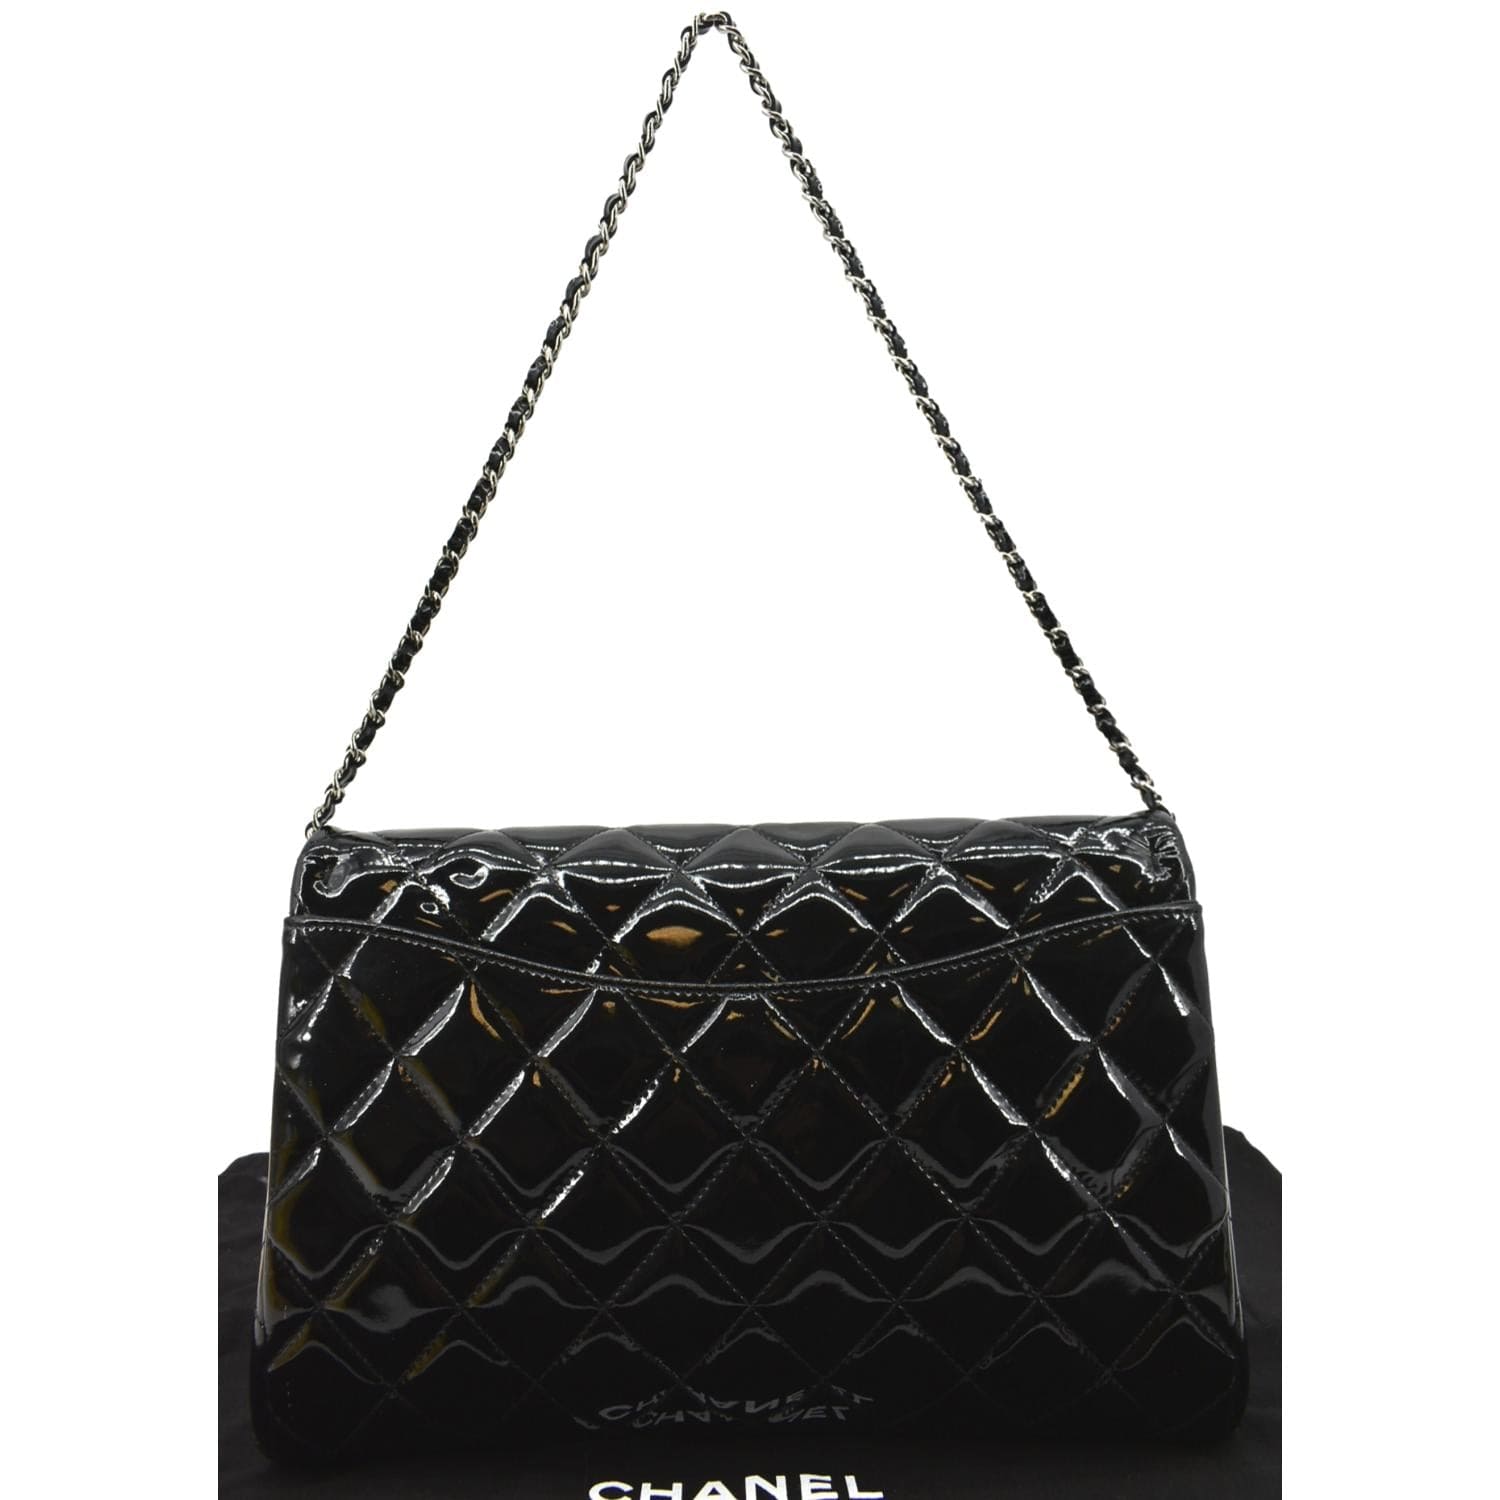 Chanel Timeless / Classique Leather Handbag - Black